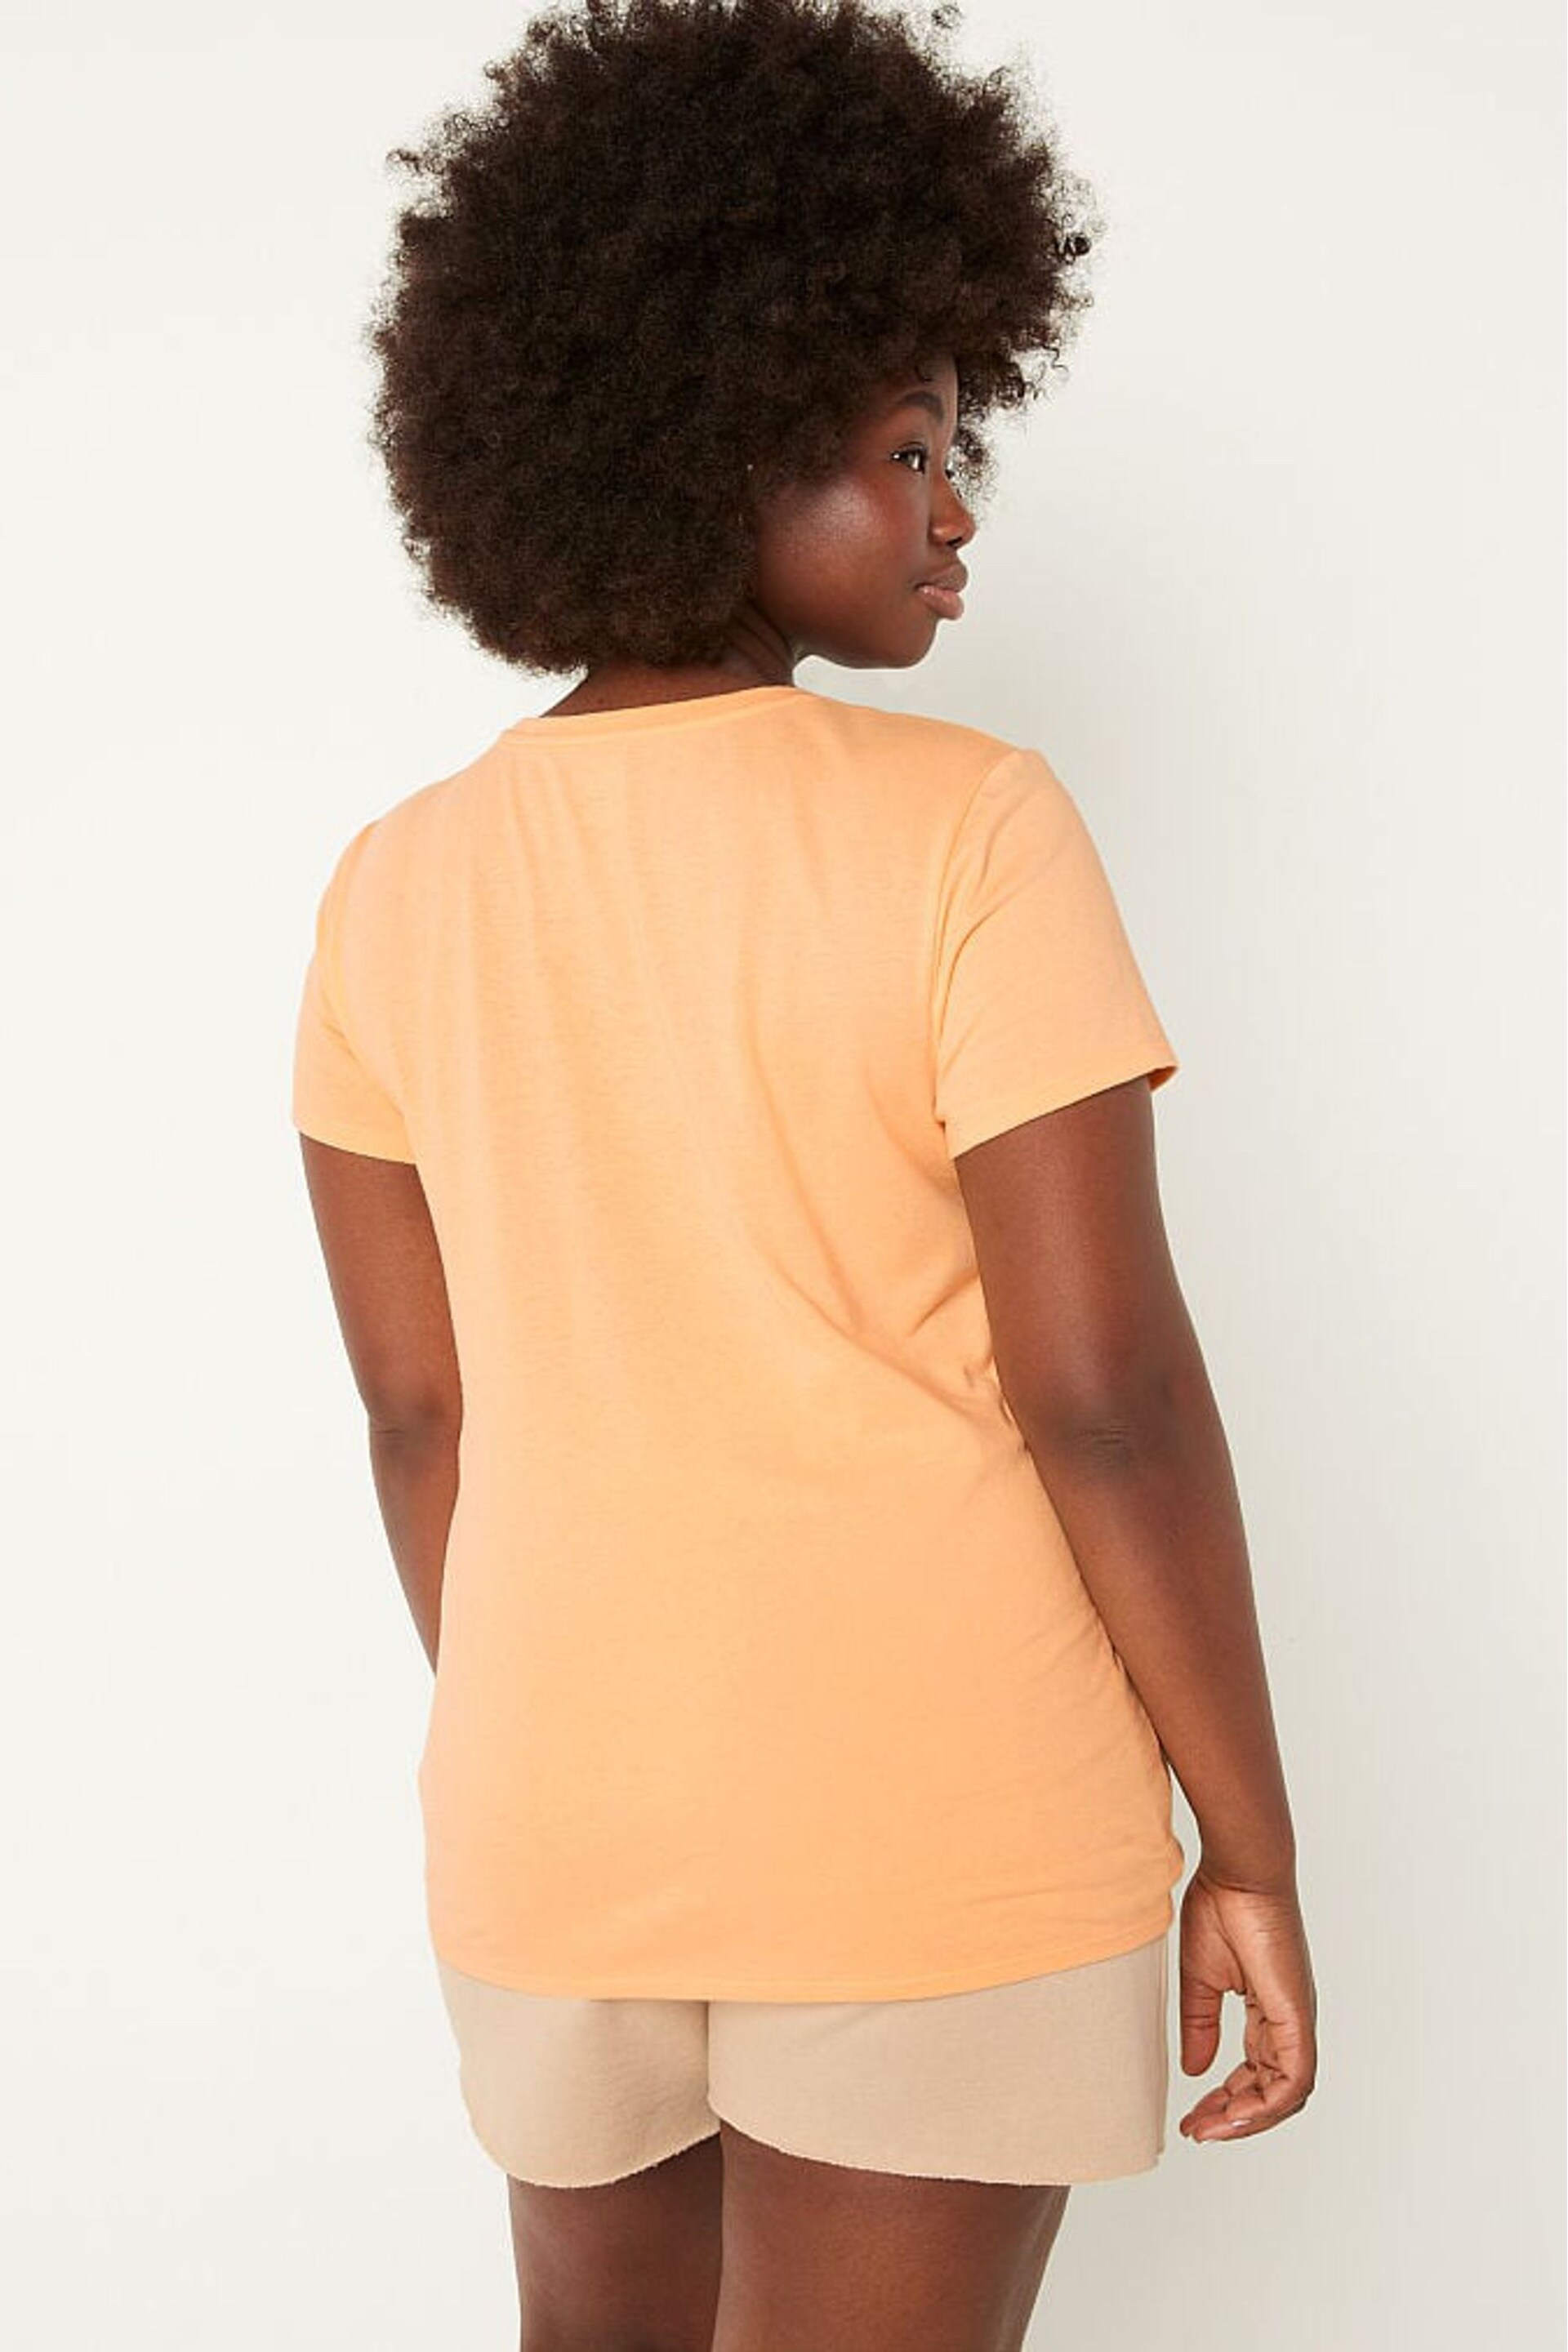 Victoria's Secret PINK Light Orange Logo Short Sleeve T-Shirt - Image 2 of 3